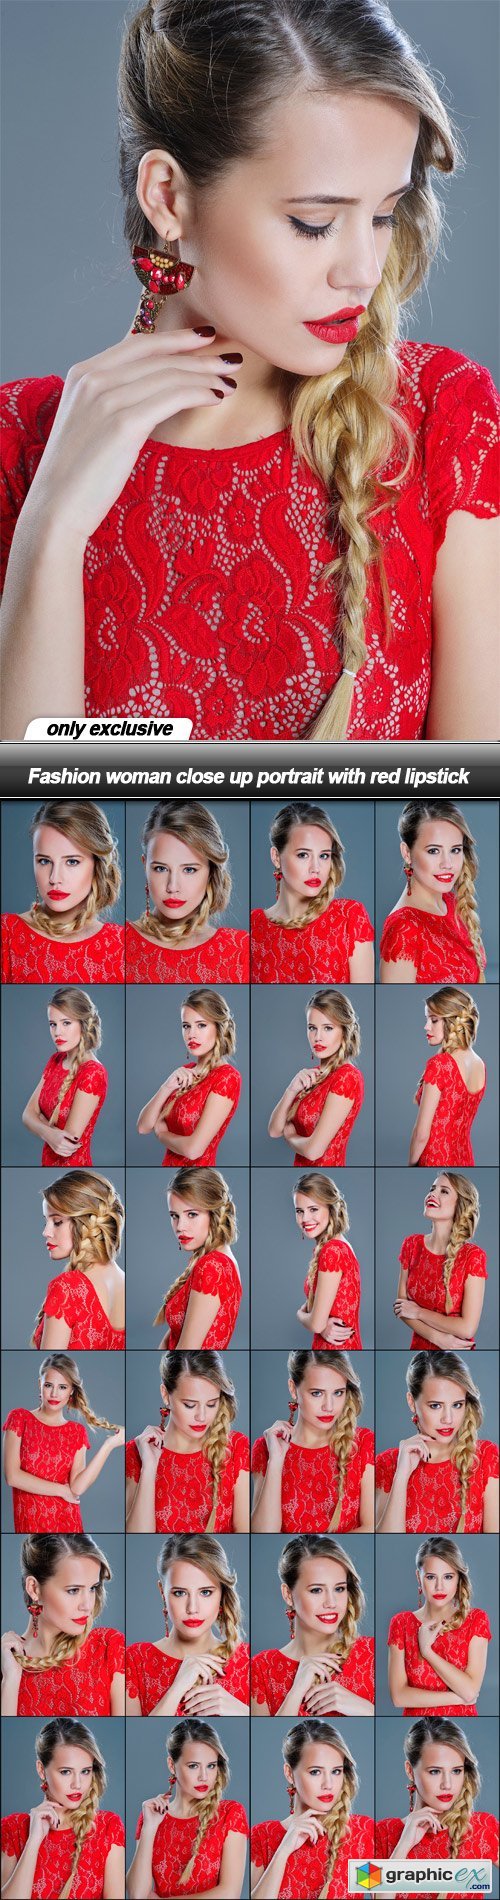 Fashion woman close up portrait with red lipstick - 25 UHQ JPEG